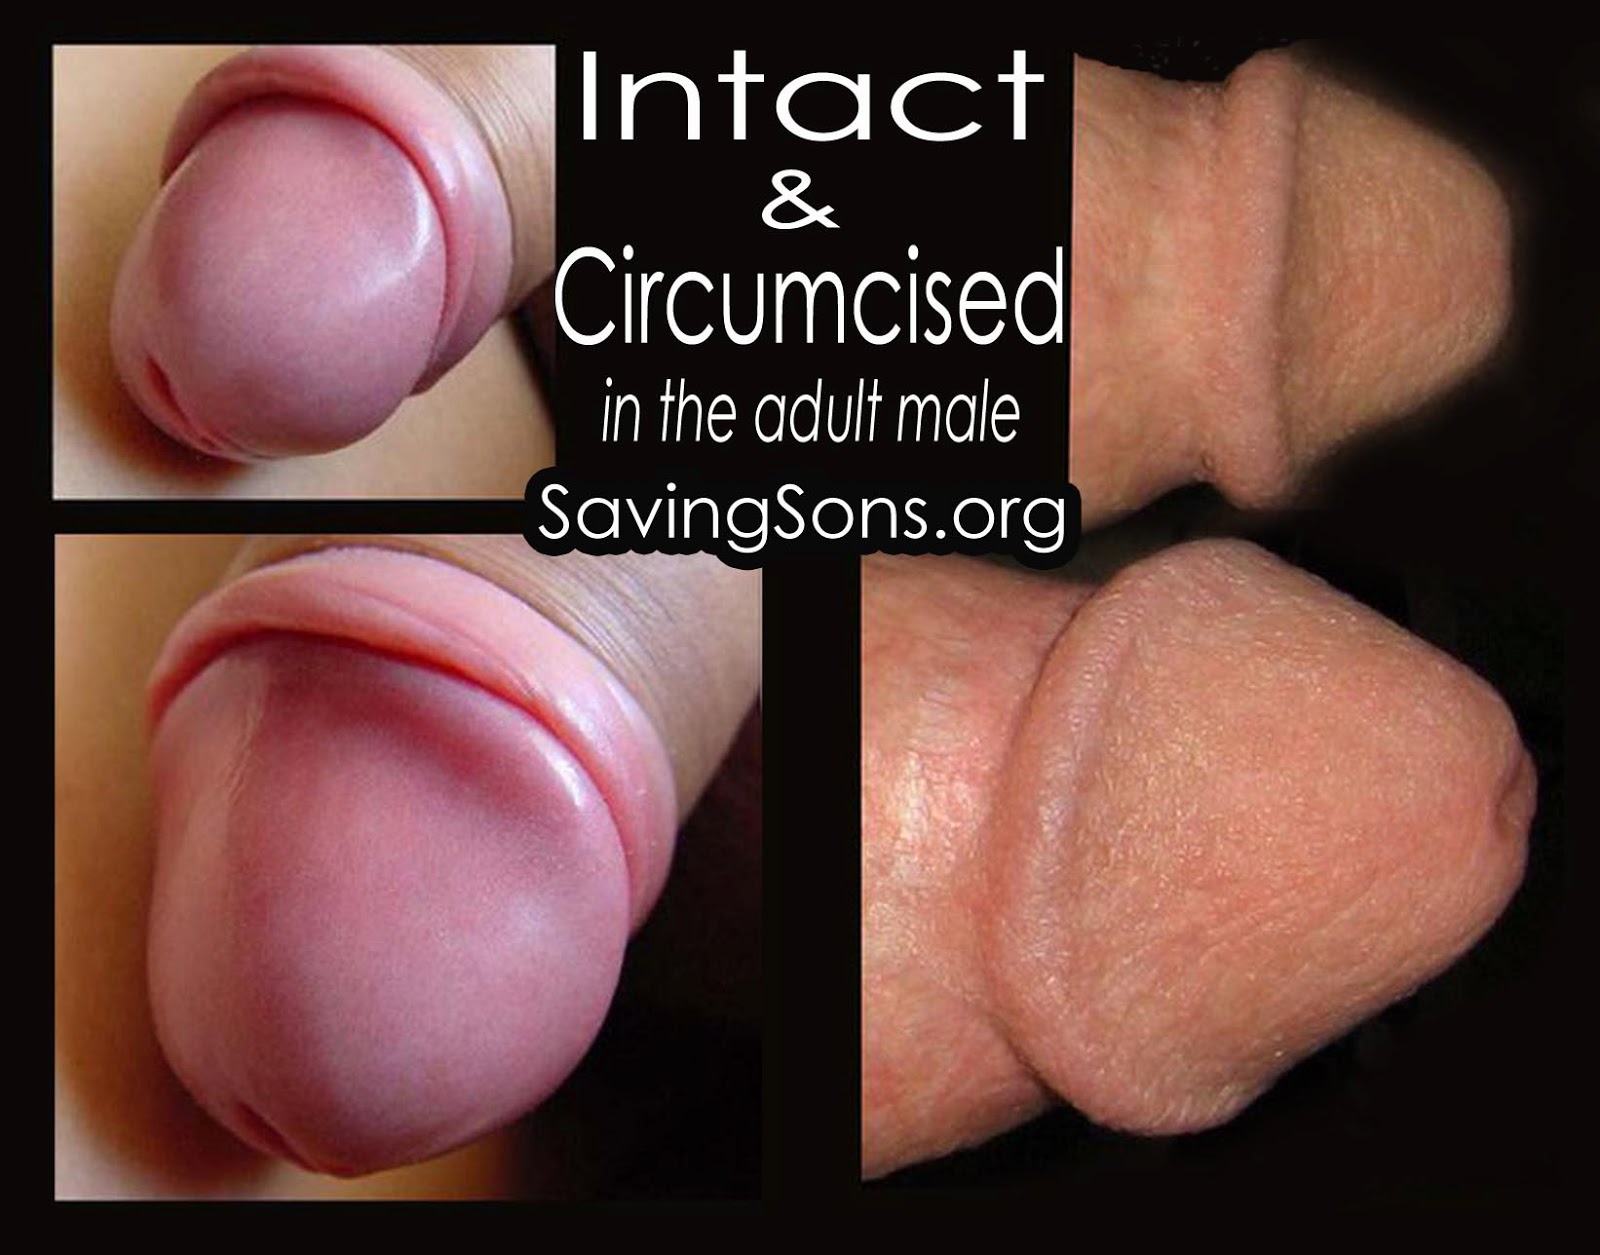 Women prefer uncircumcised